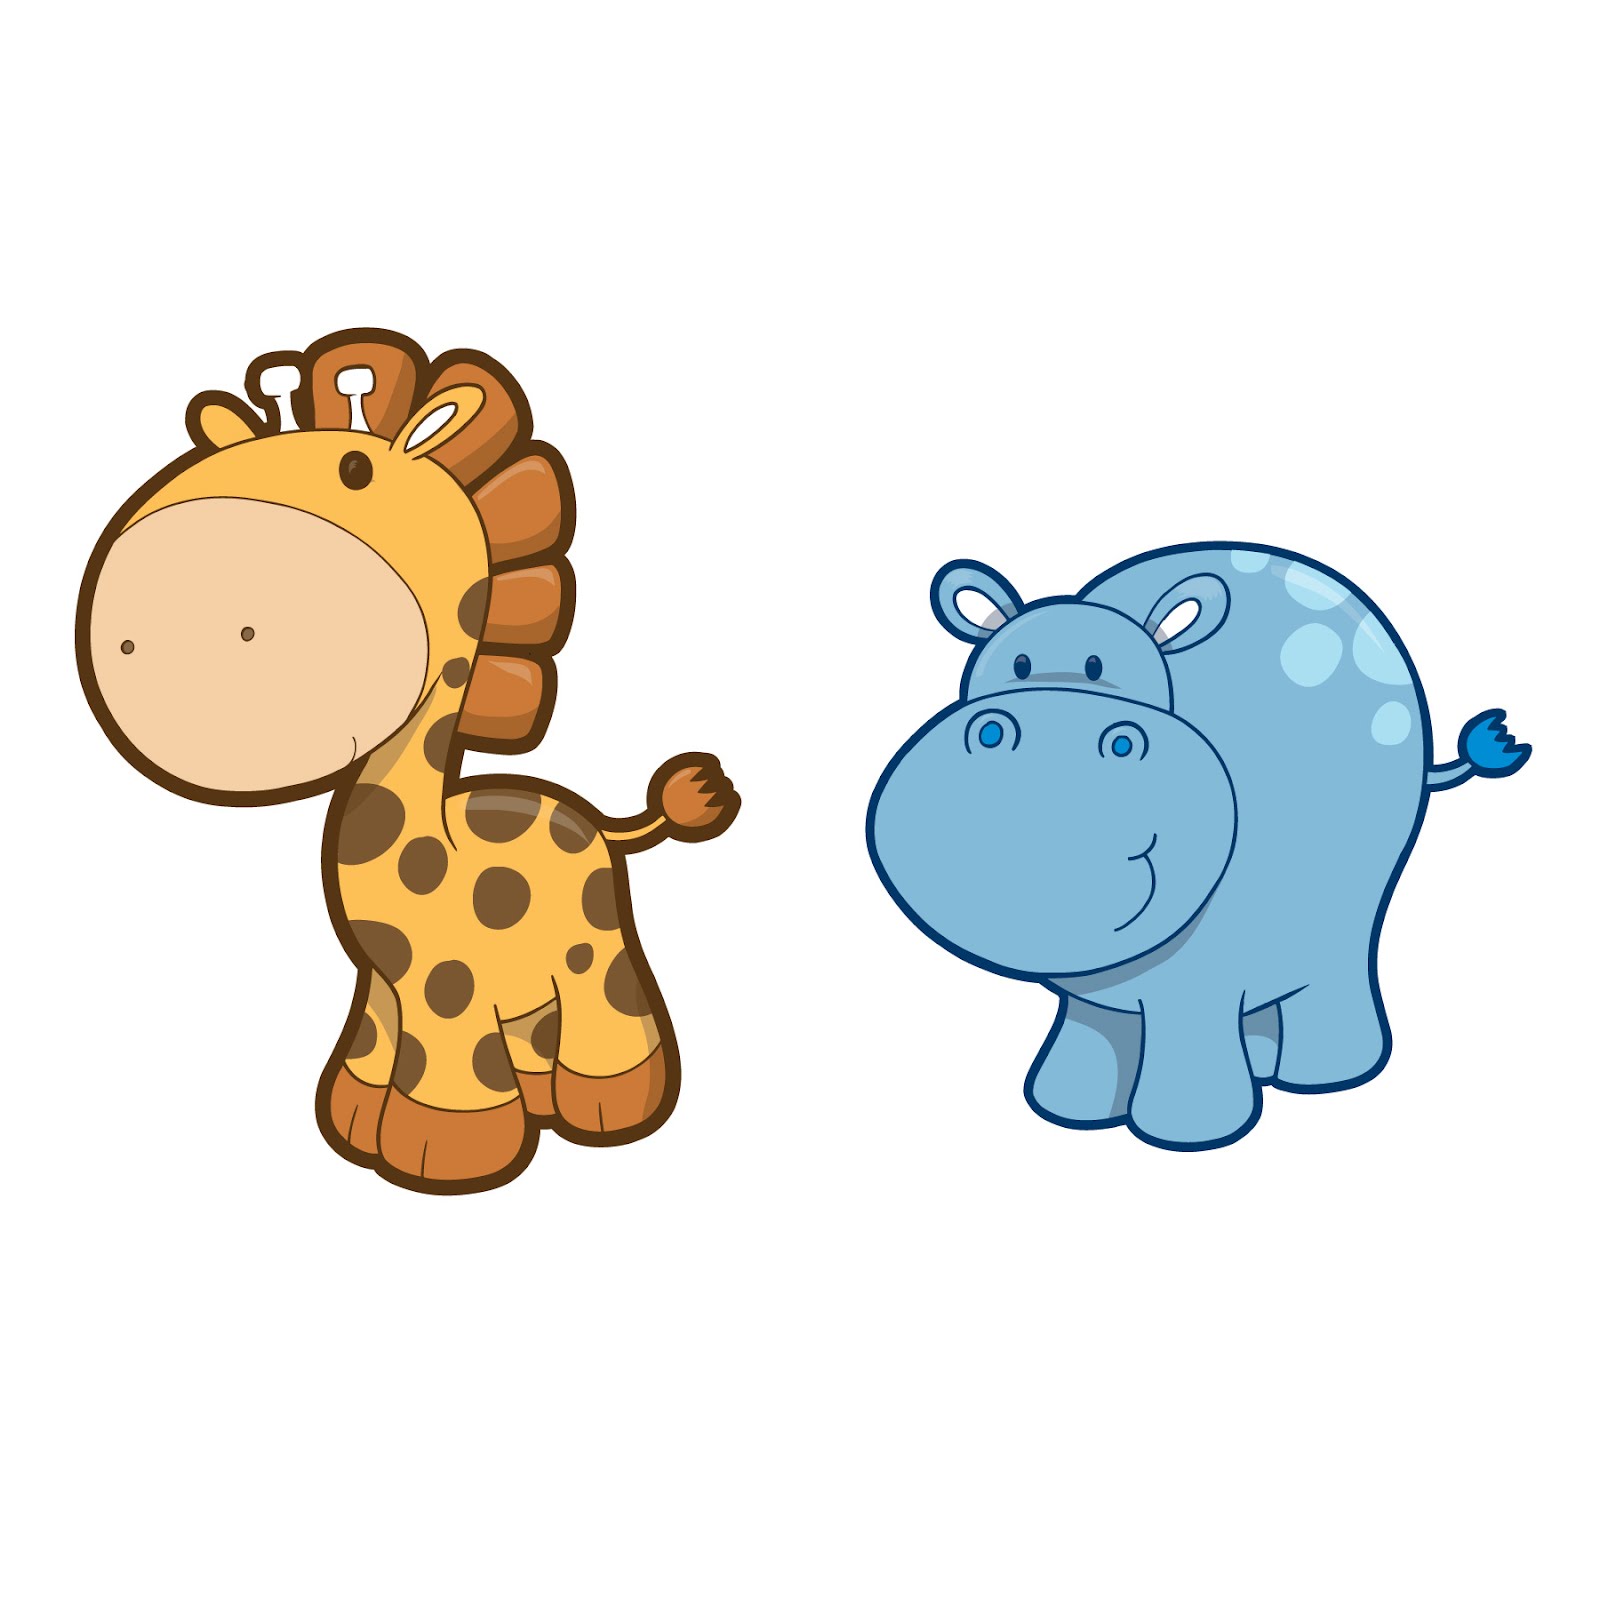 Free Cartoon Baby Giraffe Images, Download Free Clip Art.